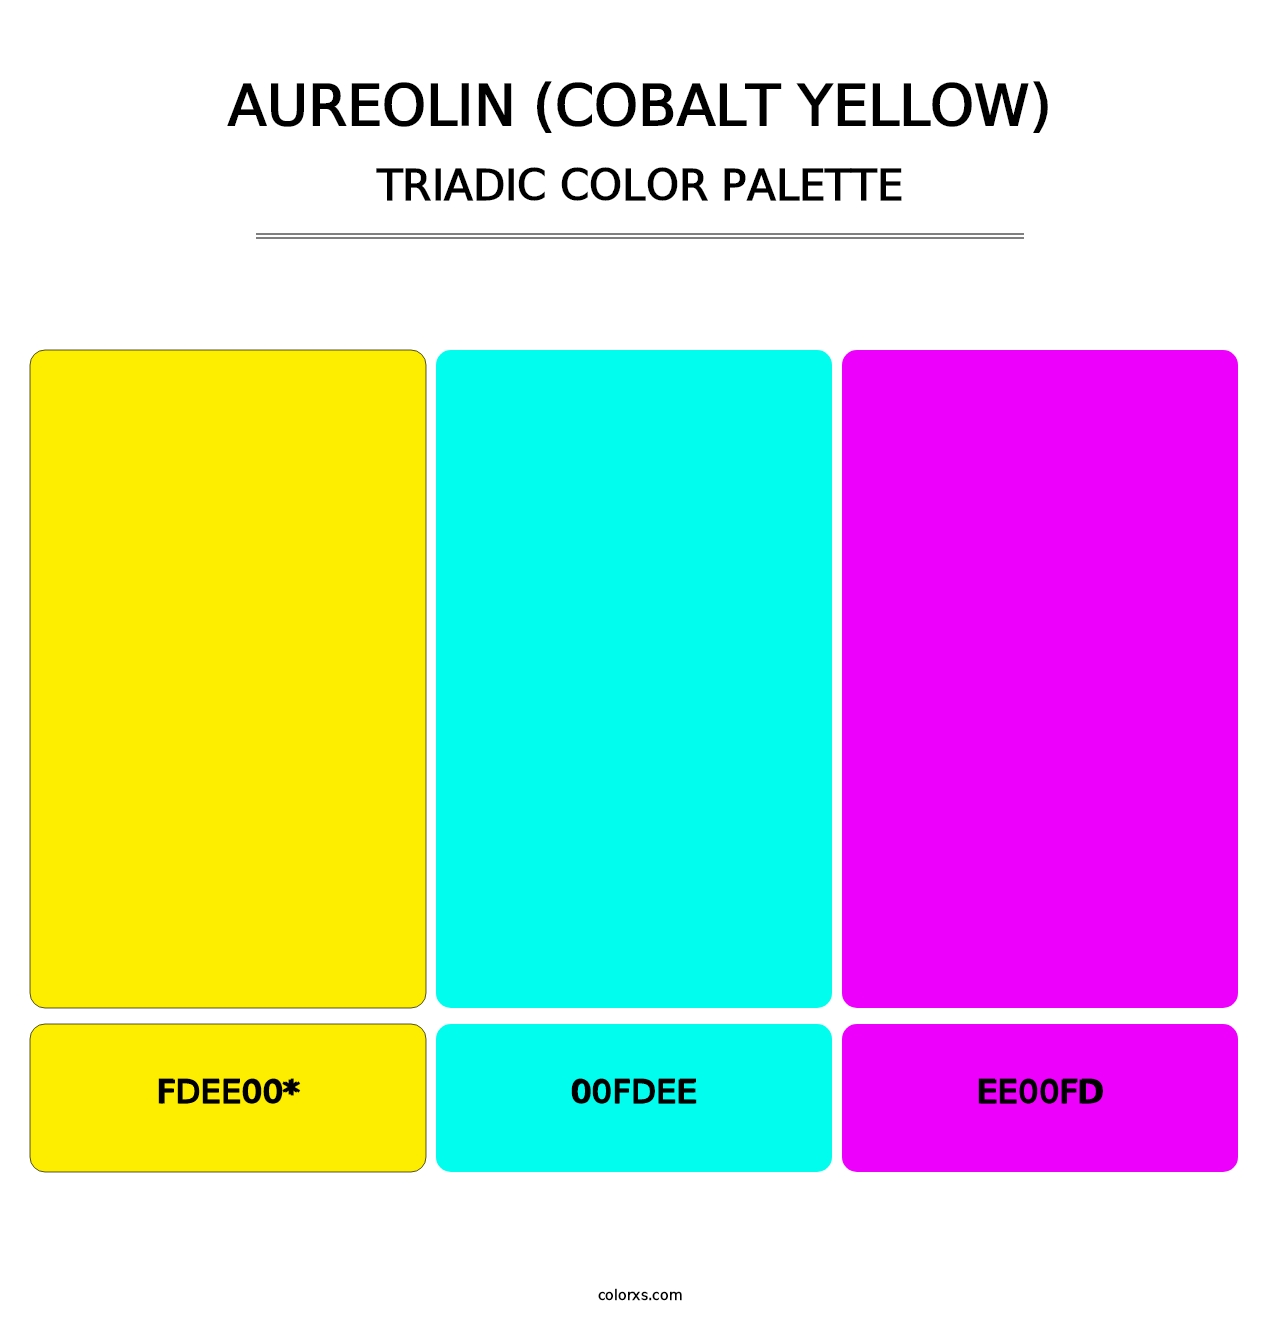 Aureolin (Cobalt Yellow) - Triadic Color Palette